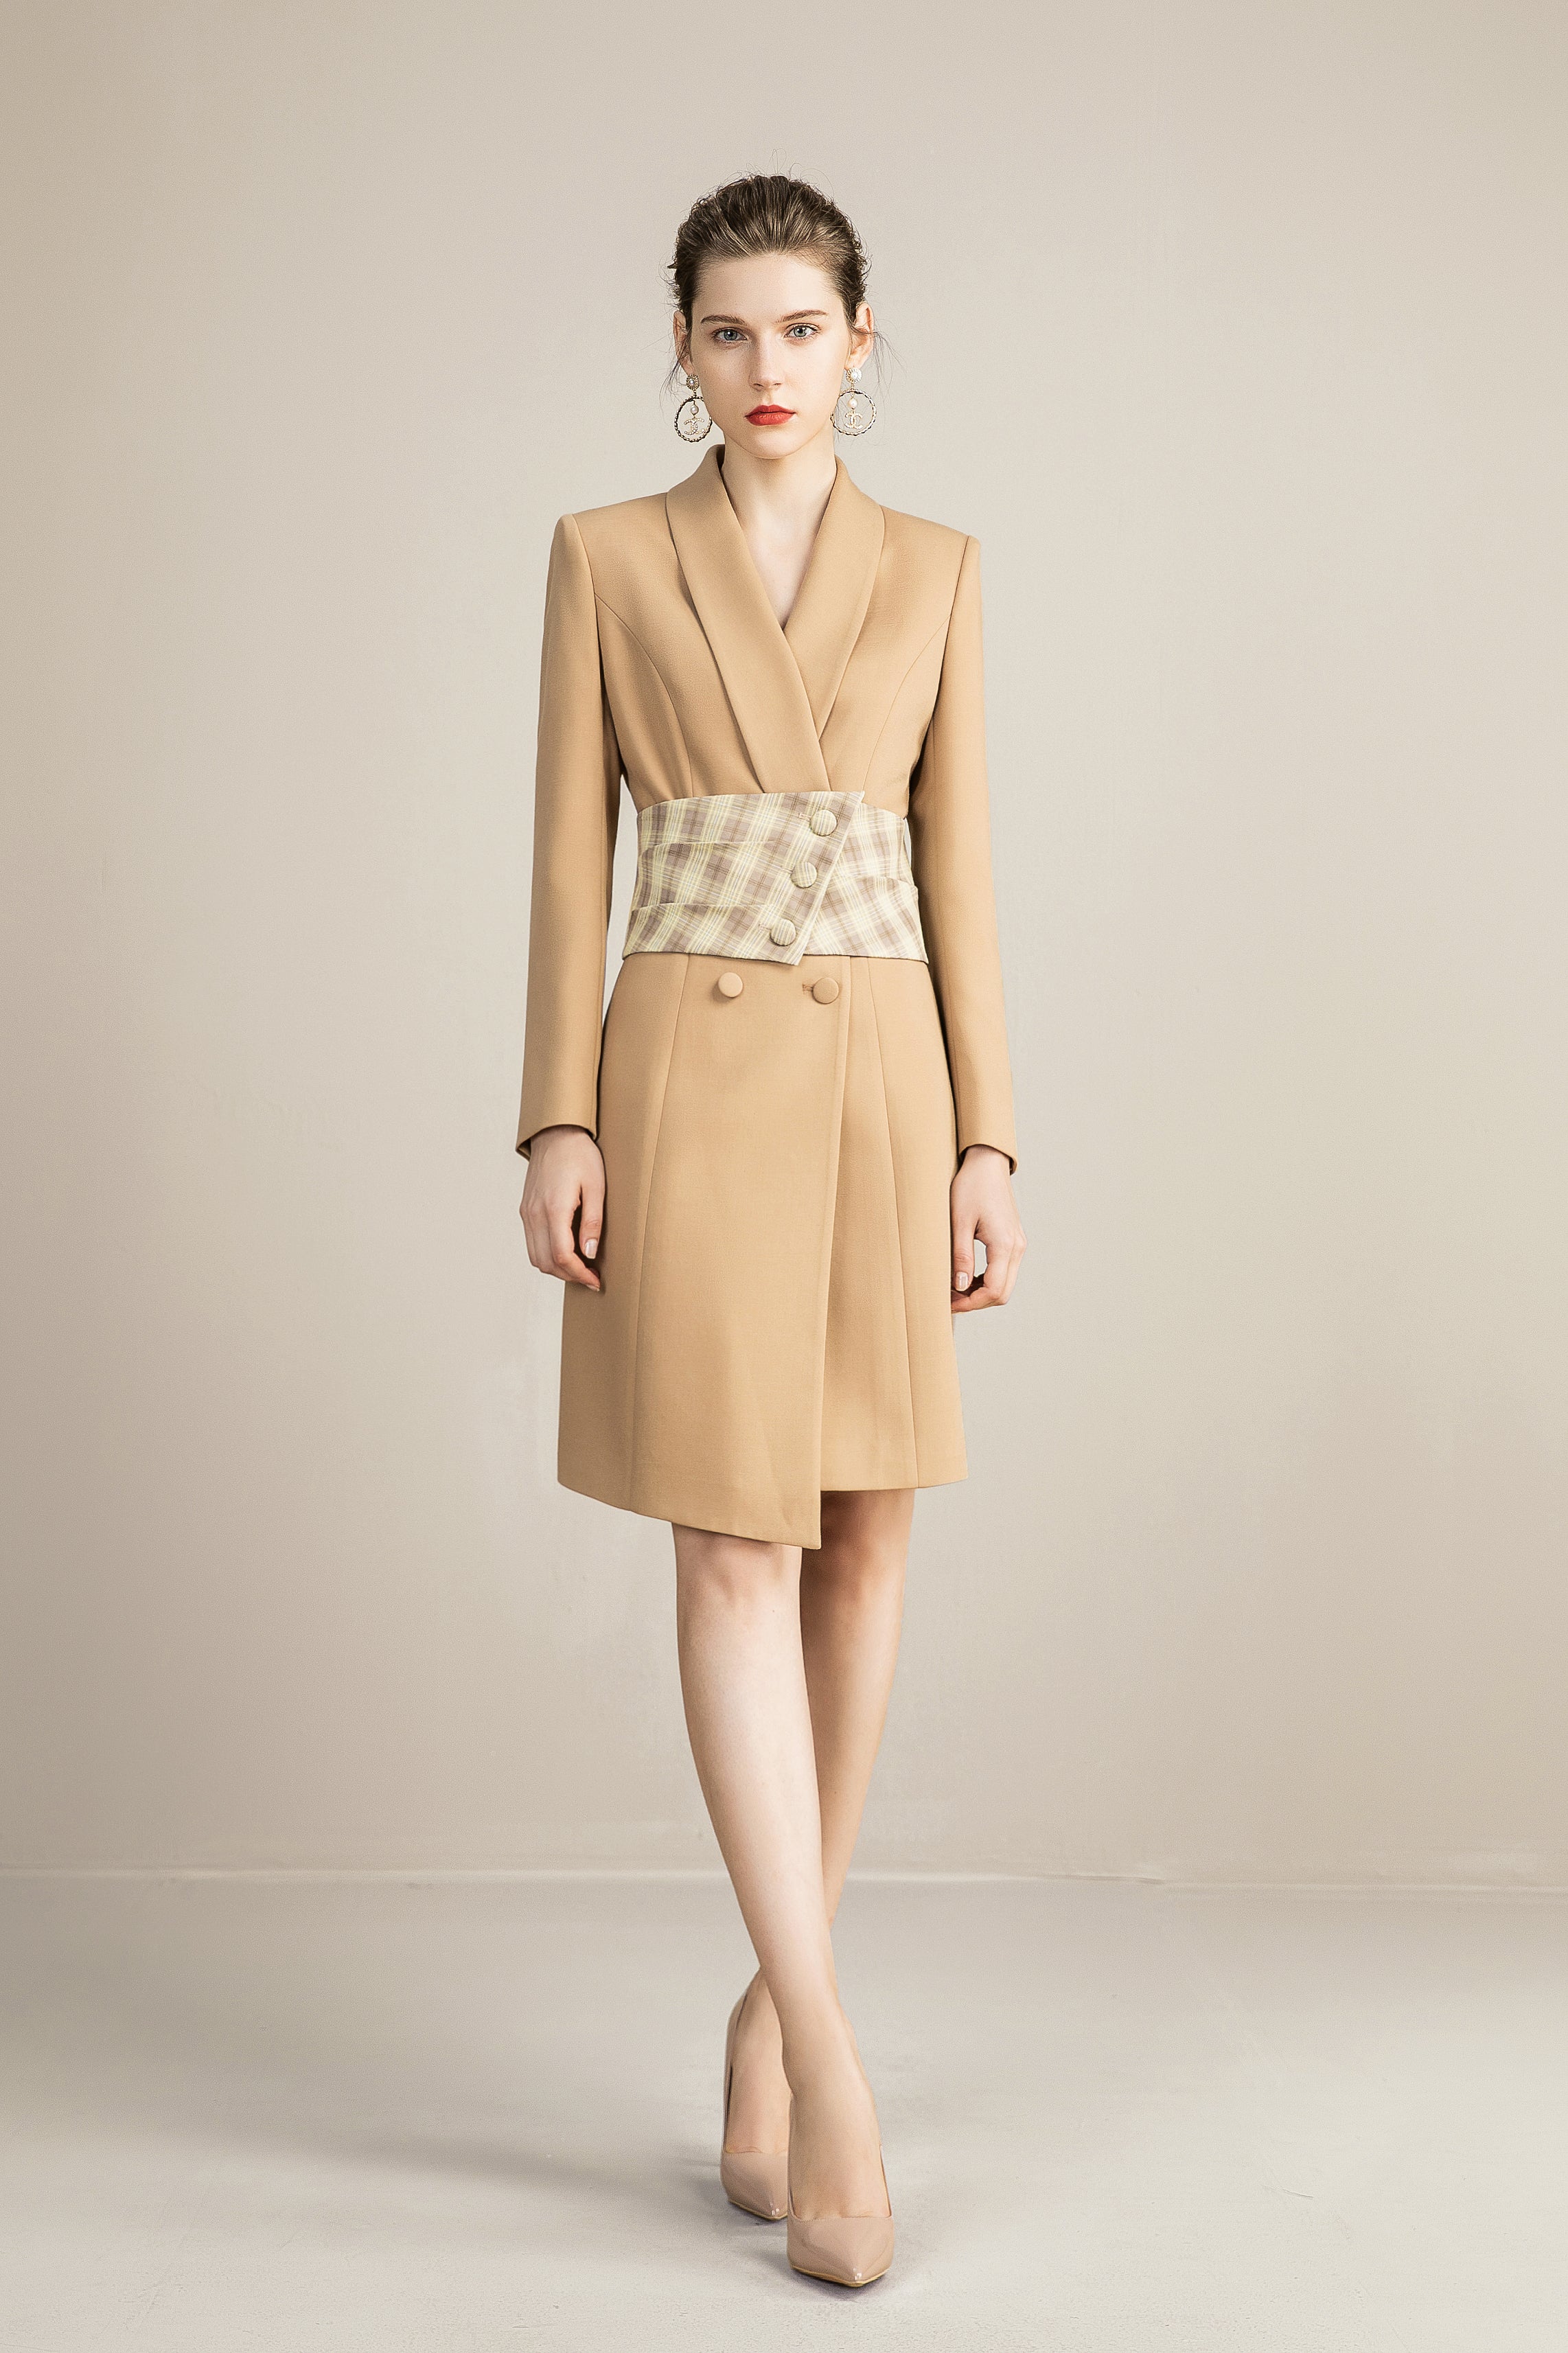 Khaki plaid contrast belted blazer dress, formal suit dress